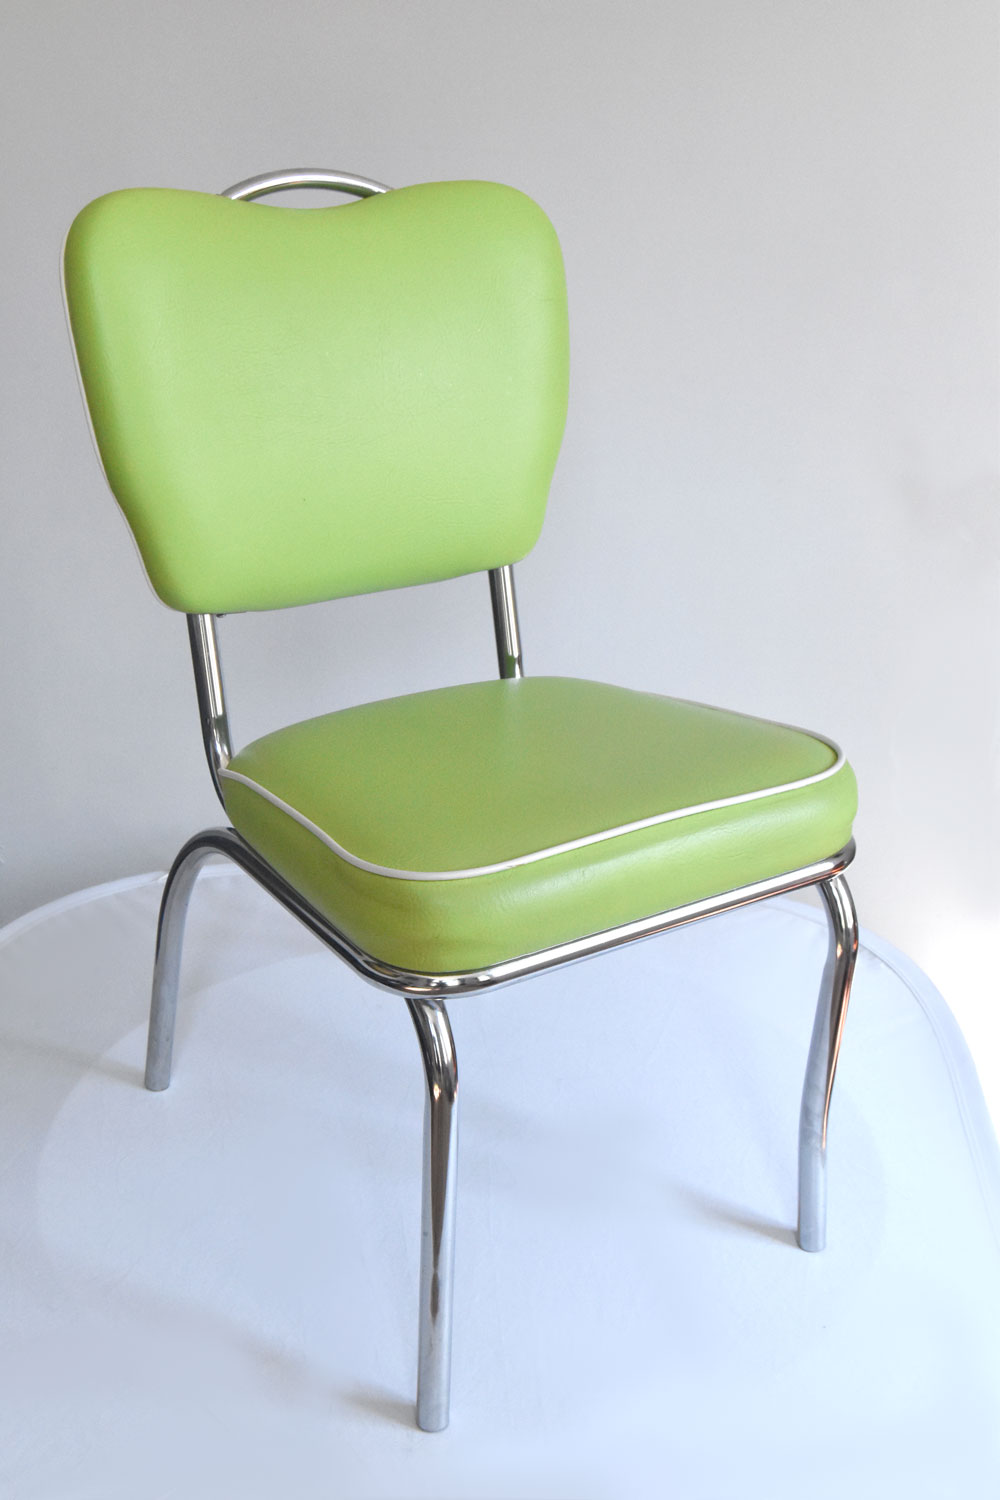 1950's Style American Diner vinyl chair